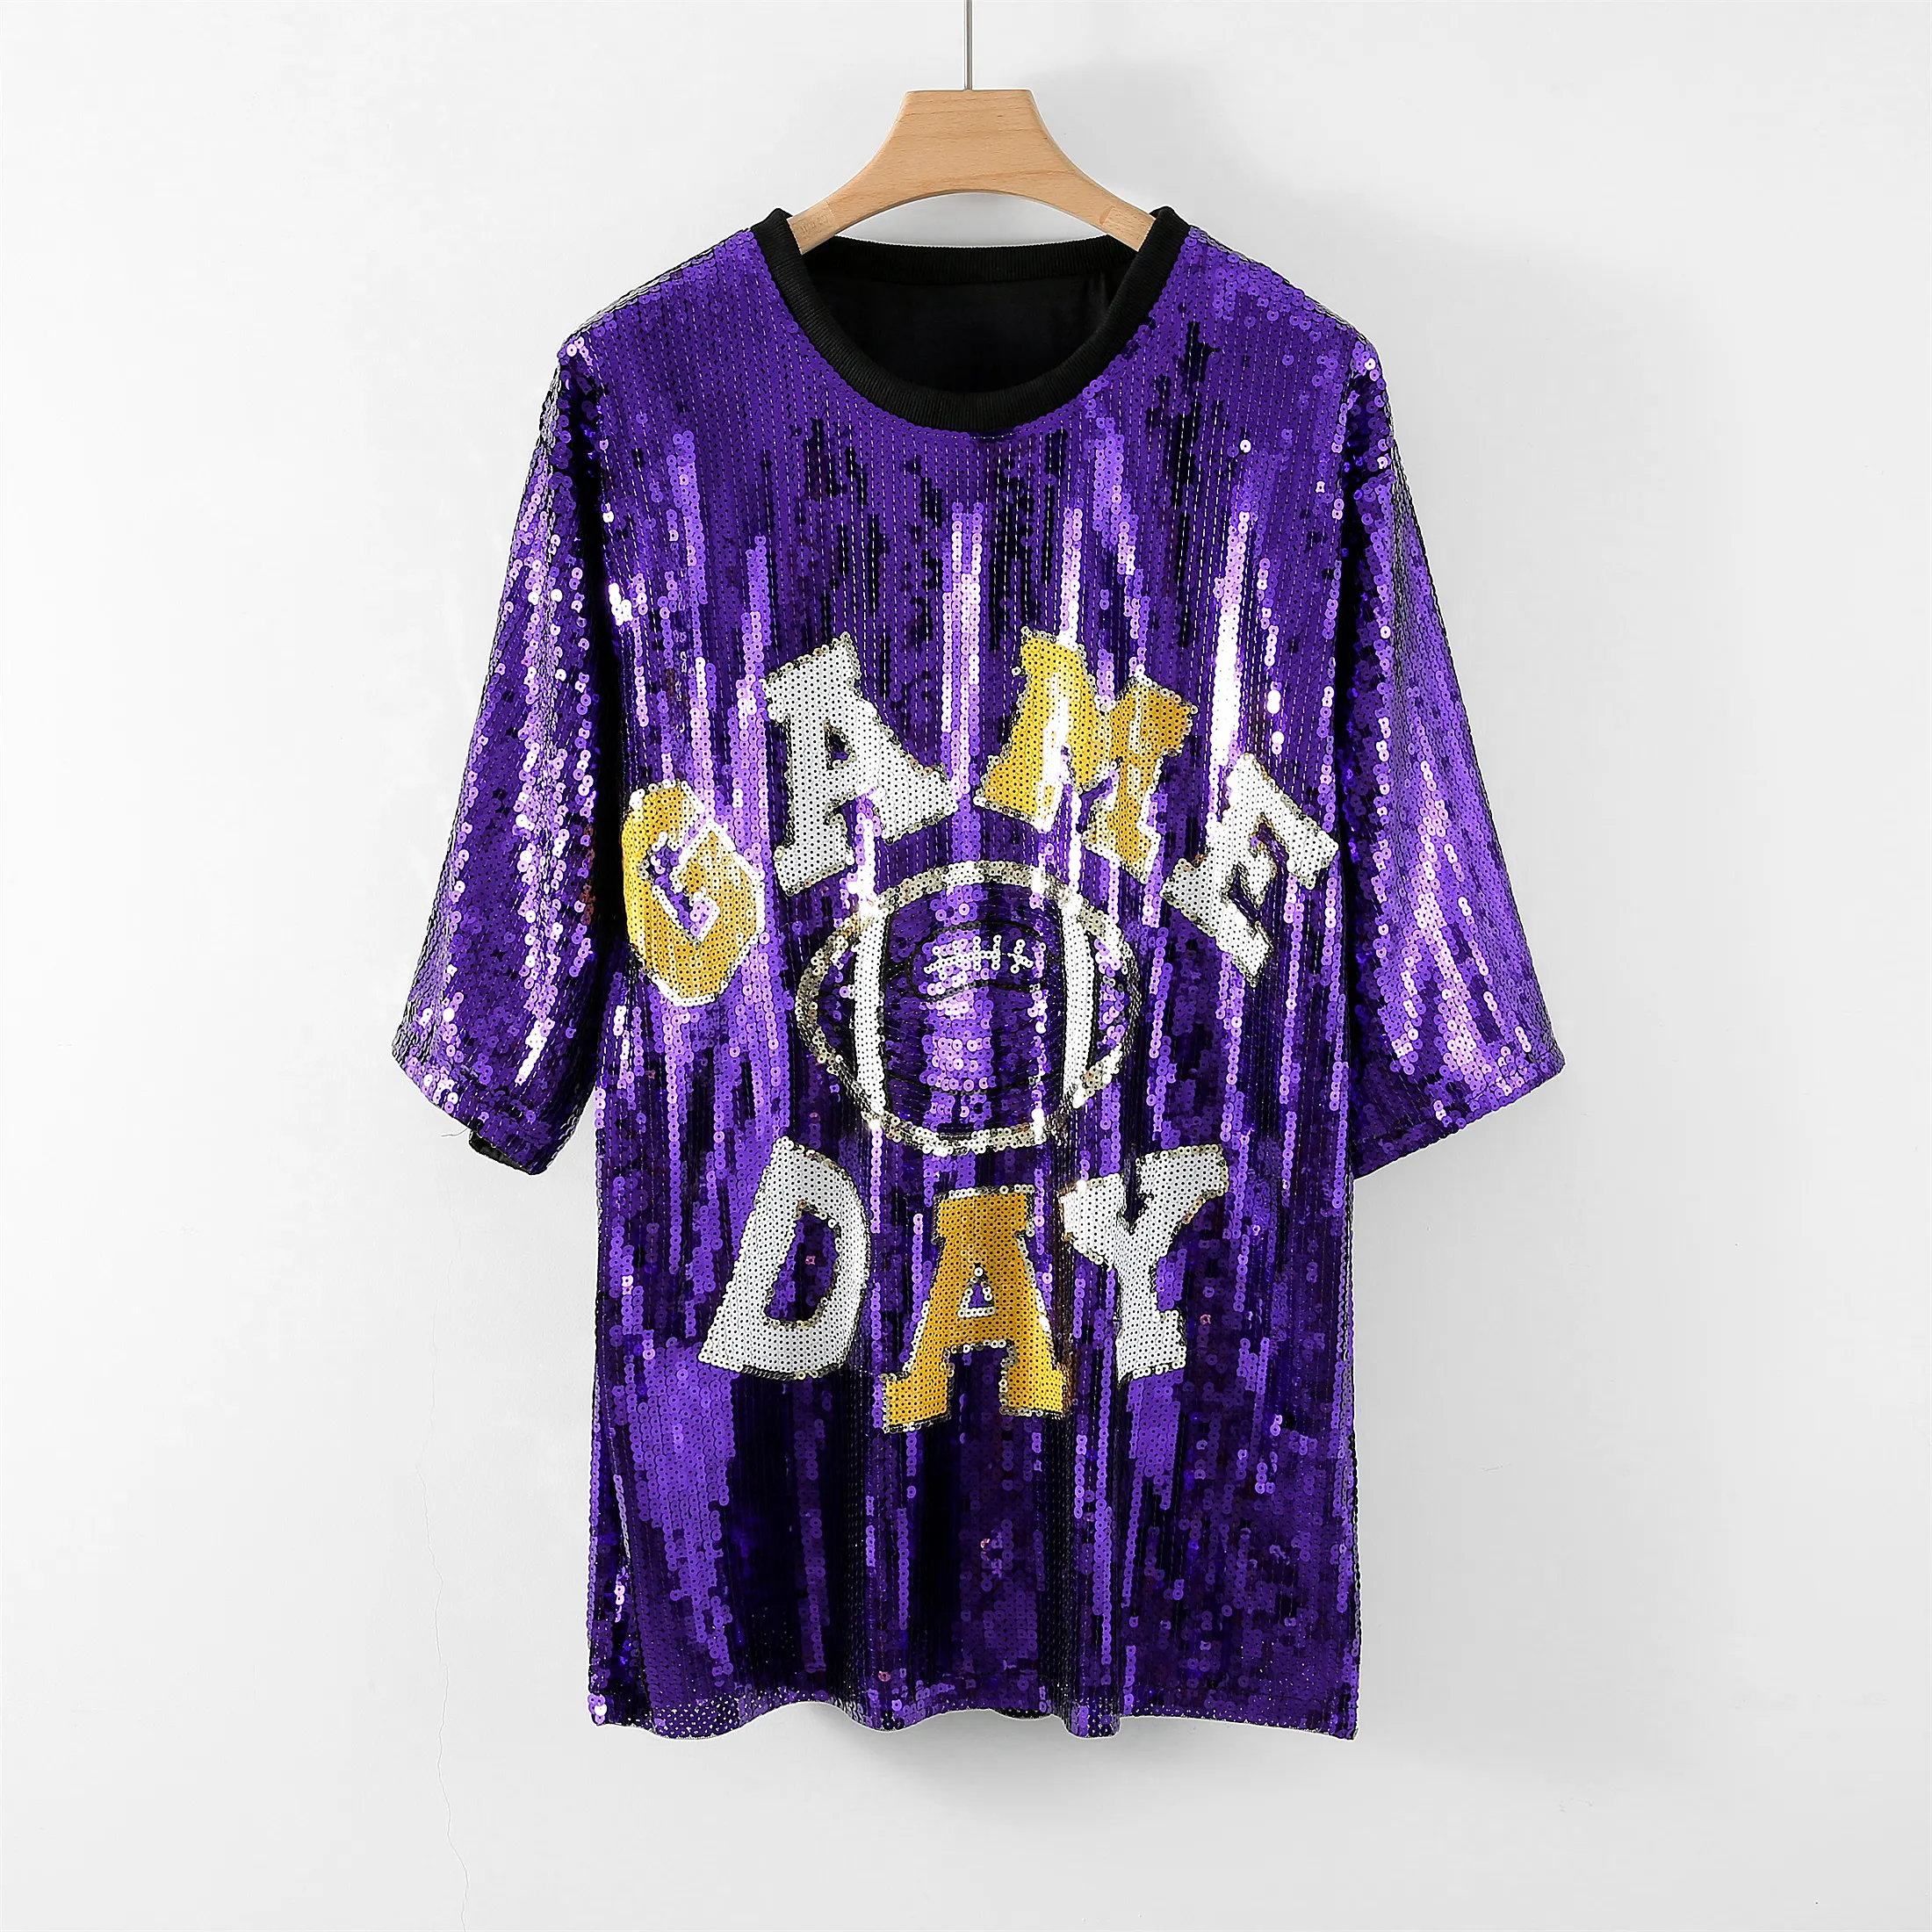 Púrpura y oro Gameday mujeres tamaño libre lentejuelas manga corta Camiseta vestido